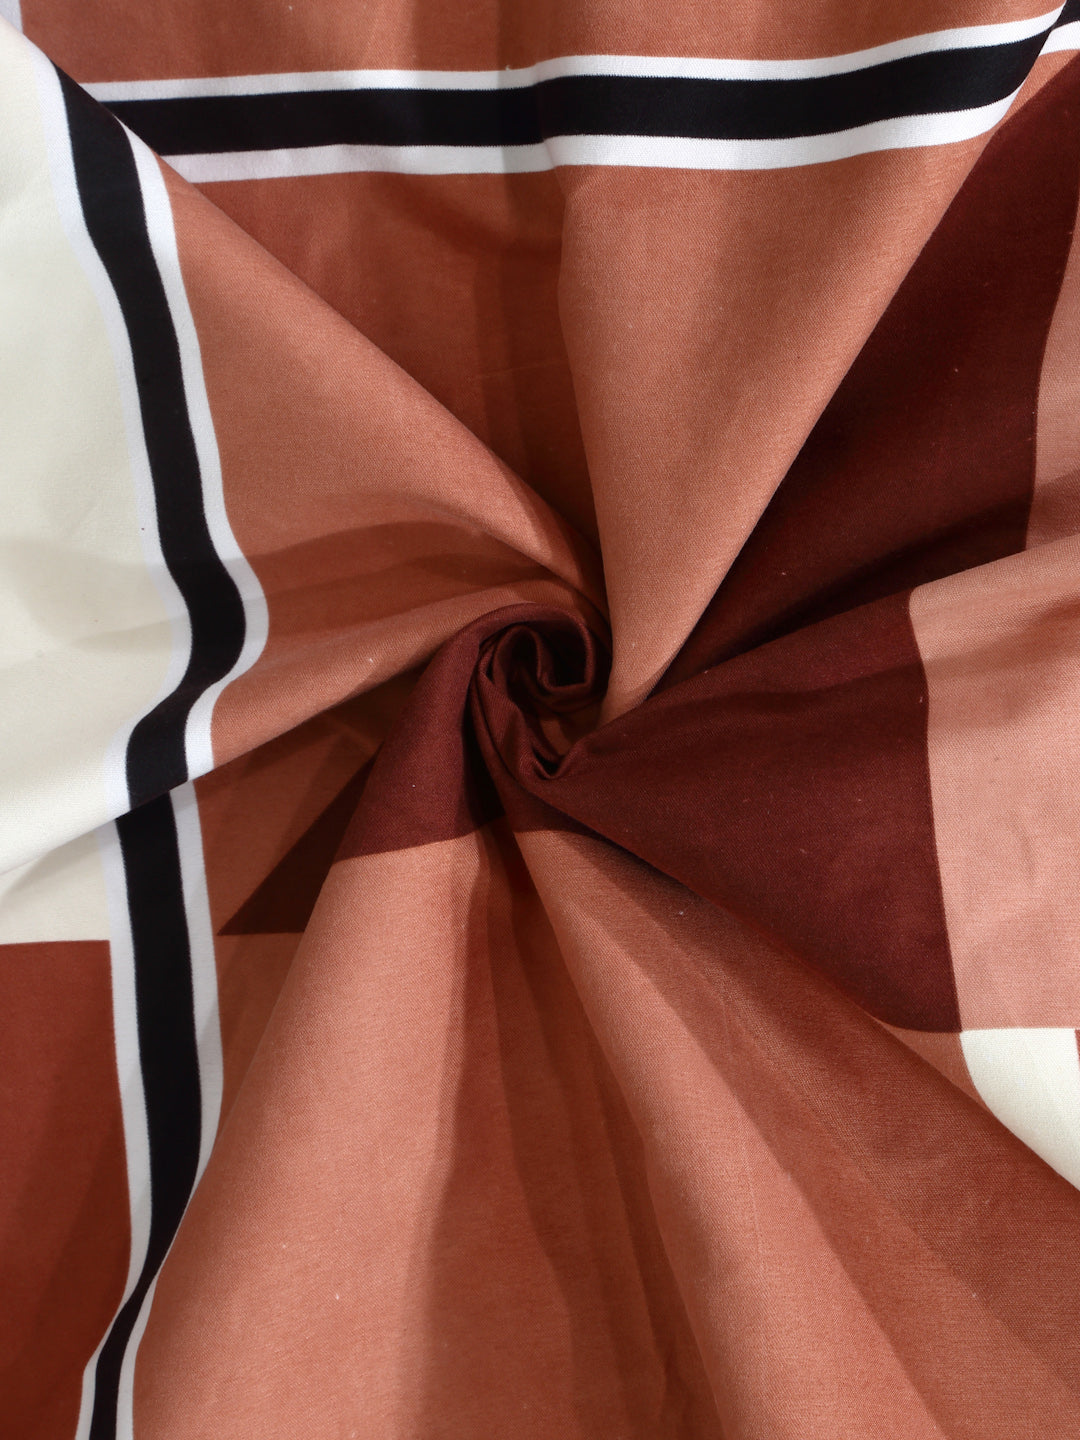 Arrabi Brown Geometric TC Cotton Blend Super King Size Bedsheet with 2 Pillow Covers (270 X 260 cm)